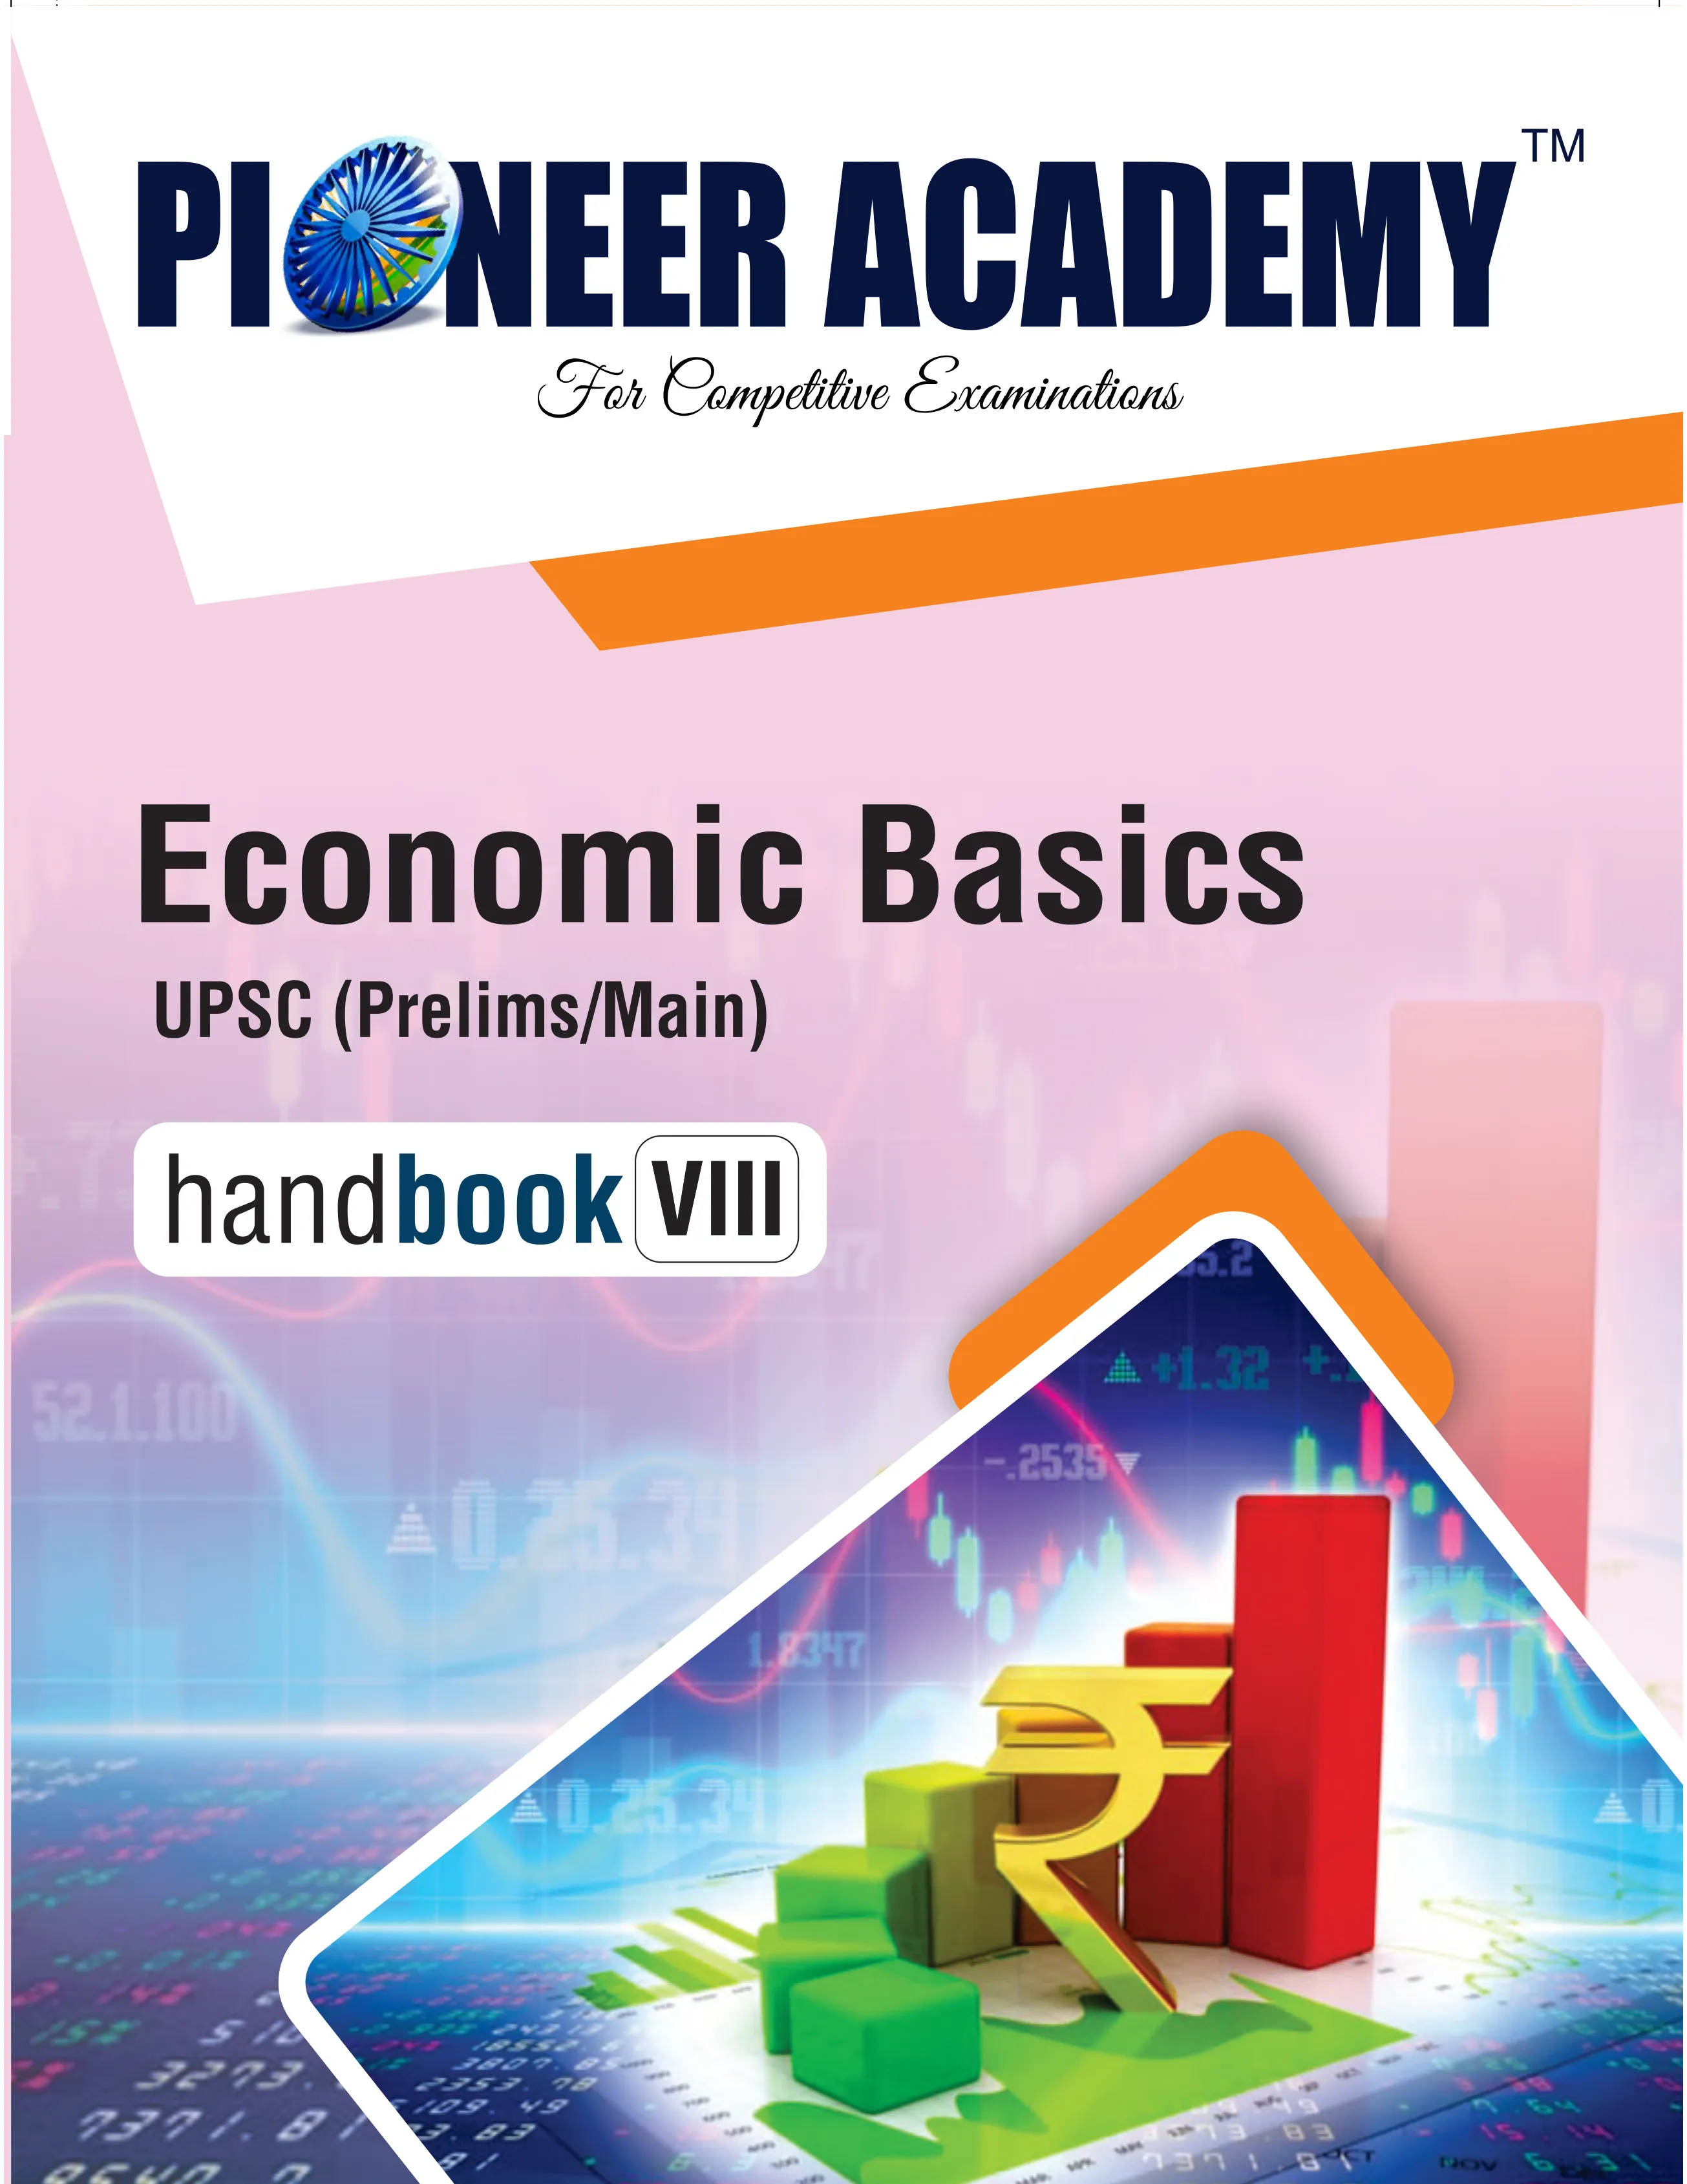 Economic Basics- UPSC (Prelims/Main)